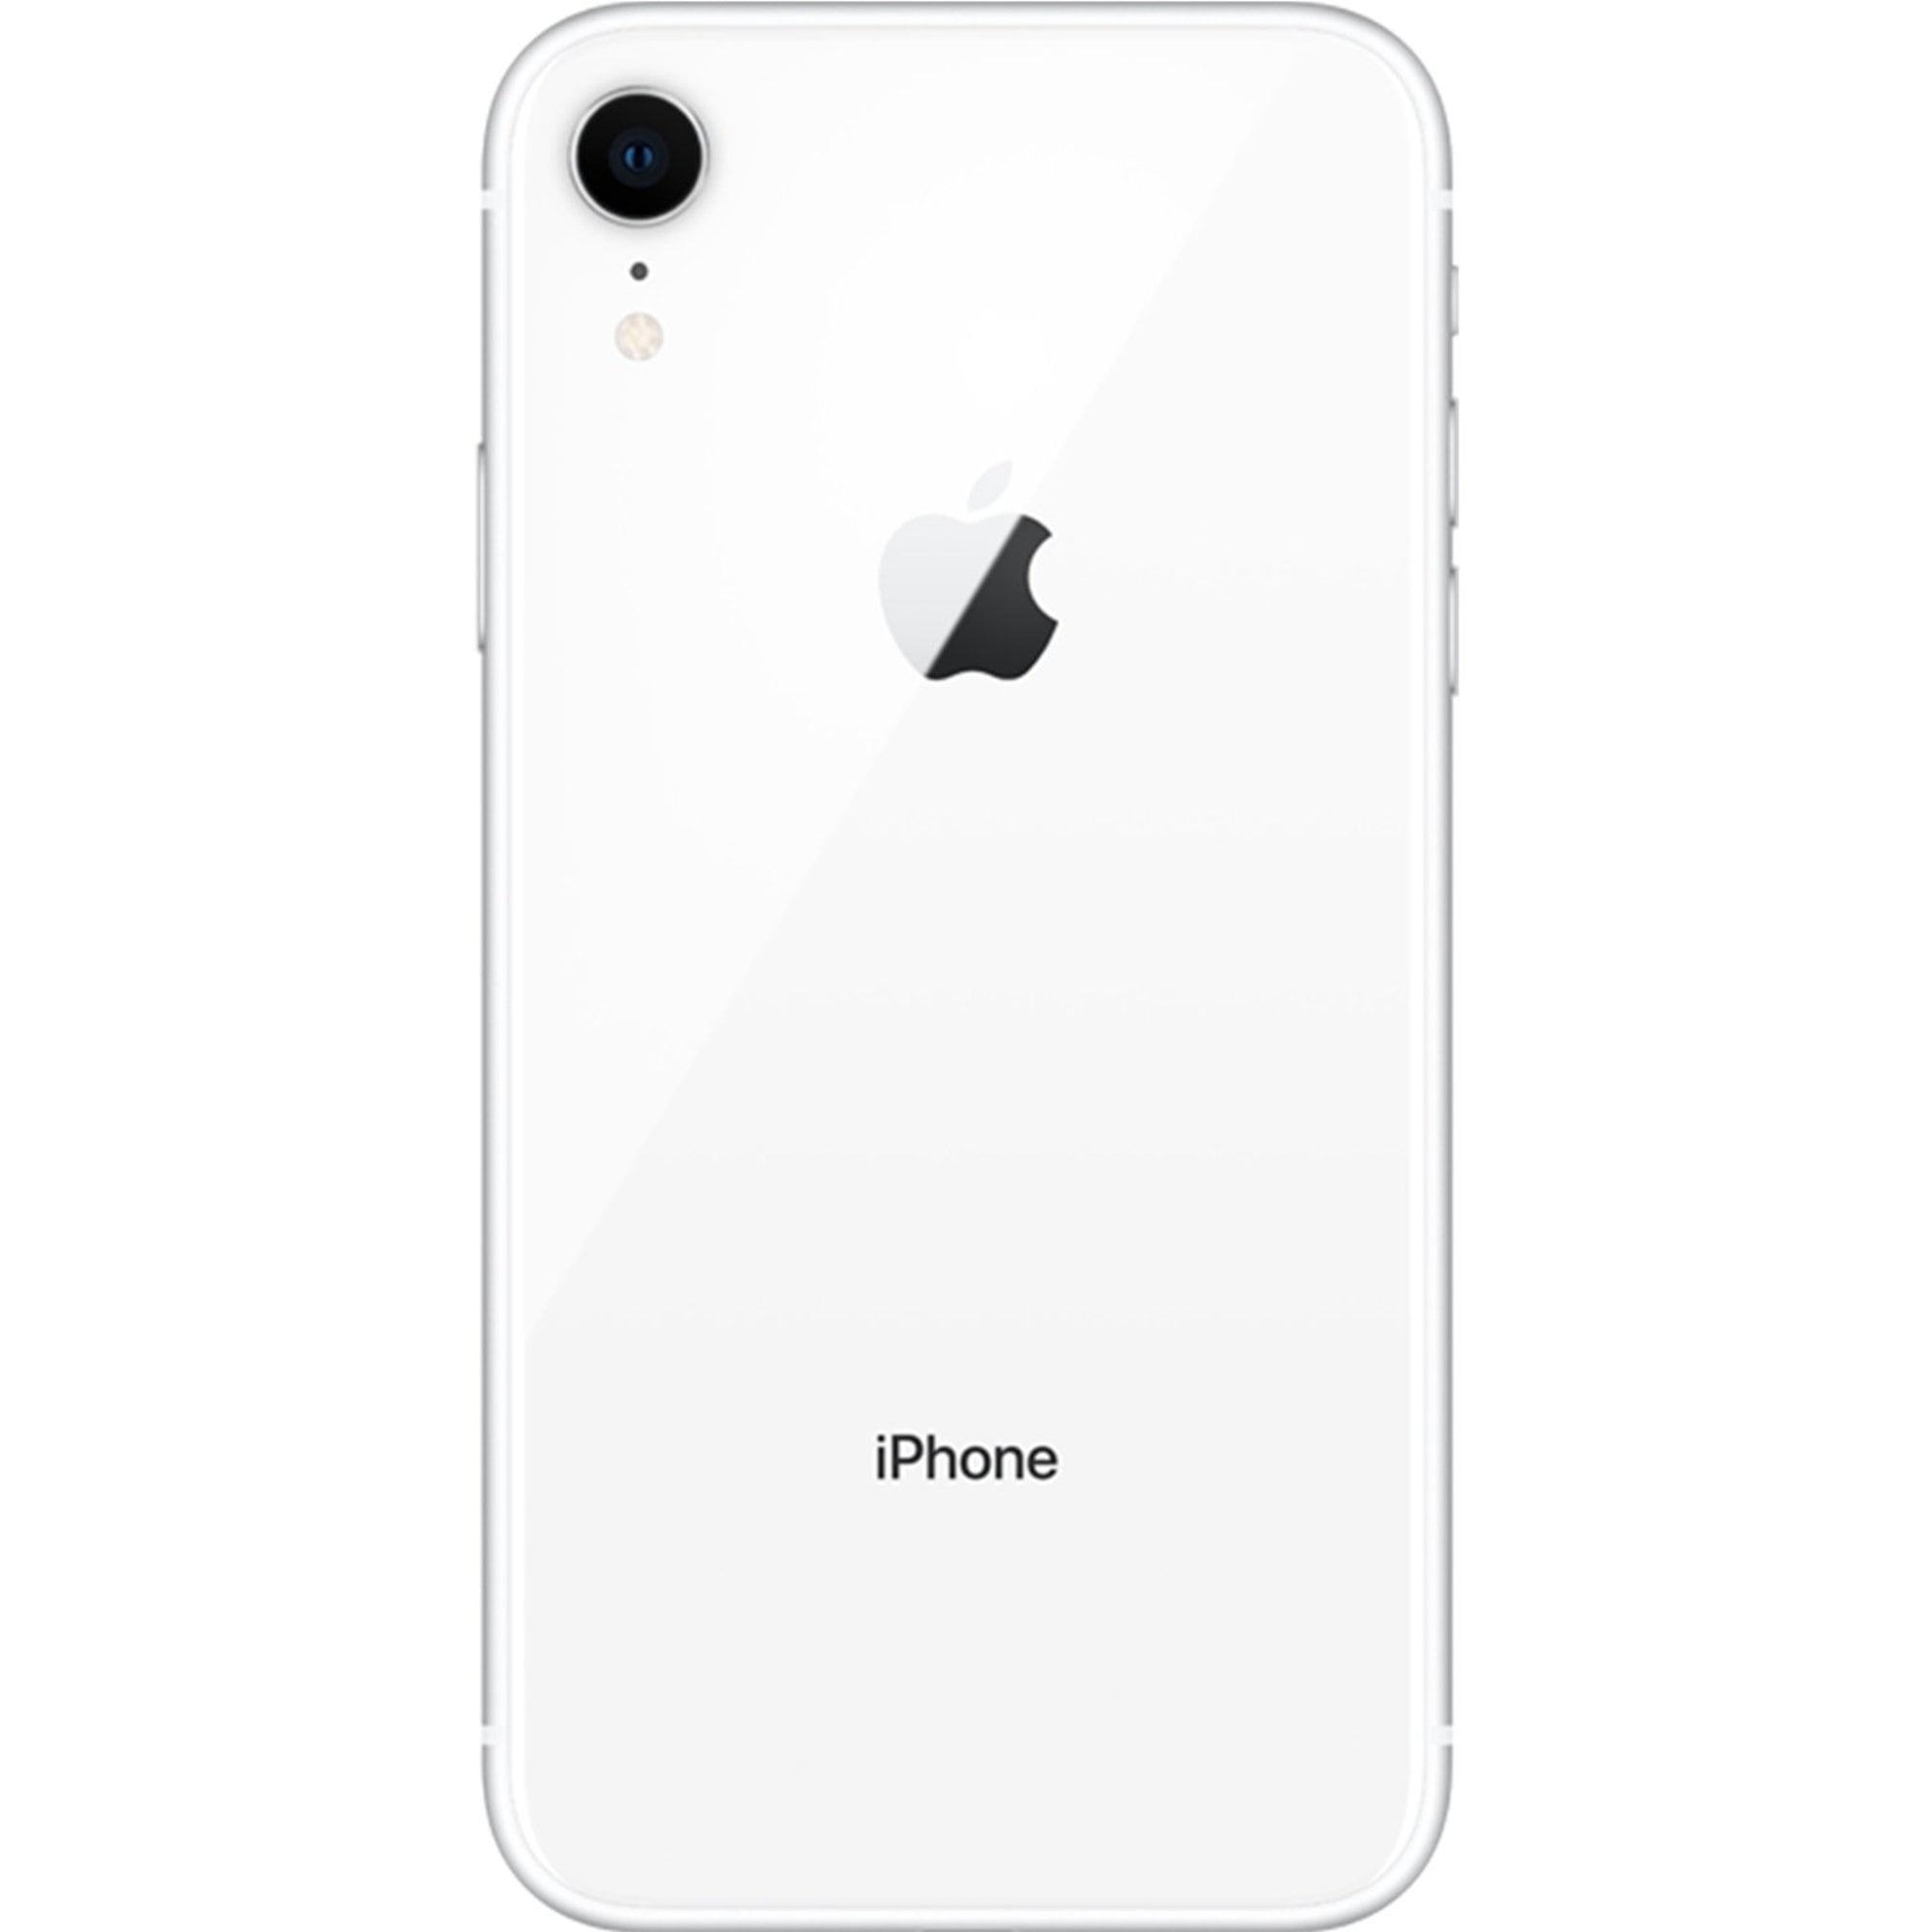 Apple iPhone XR 128GB Fully Unlocked (Verizon + Sprint + GSM